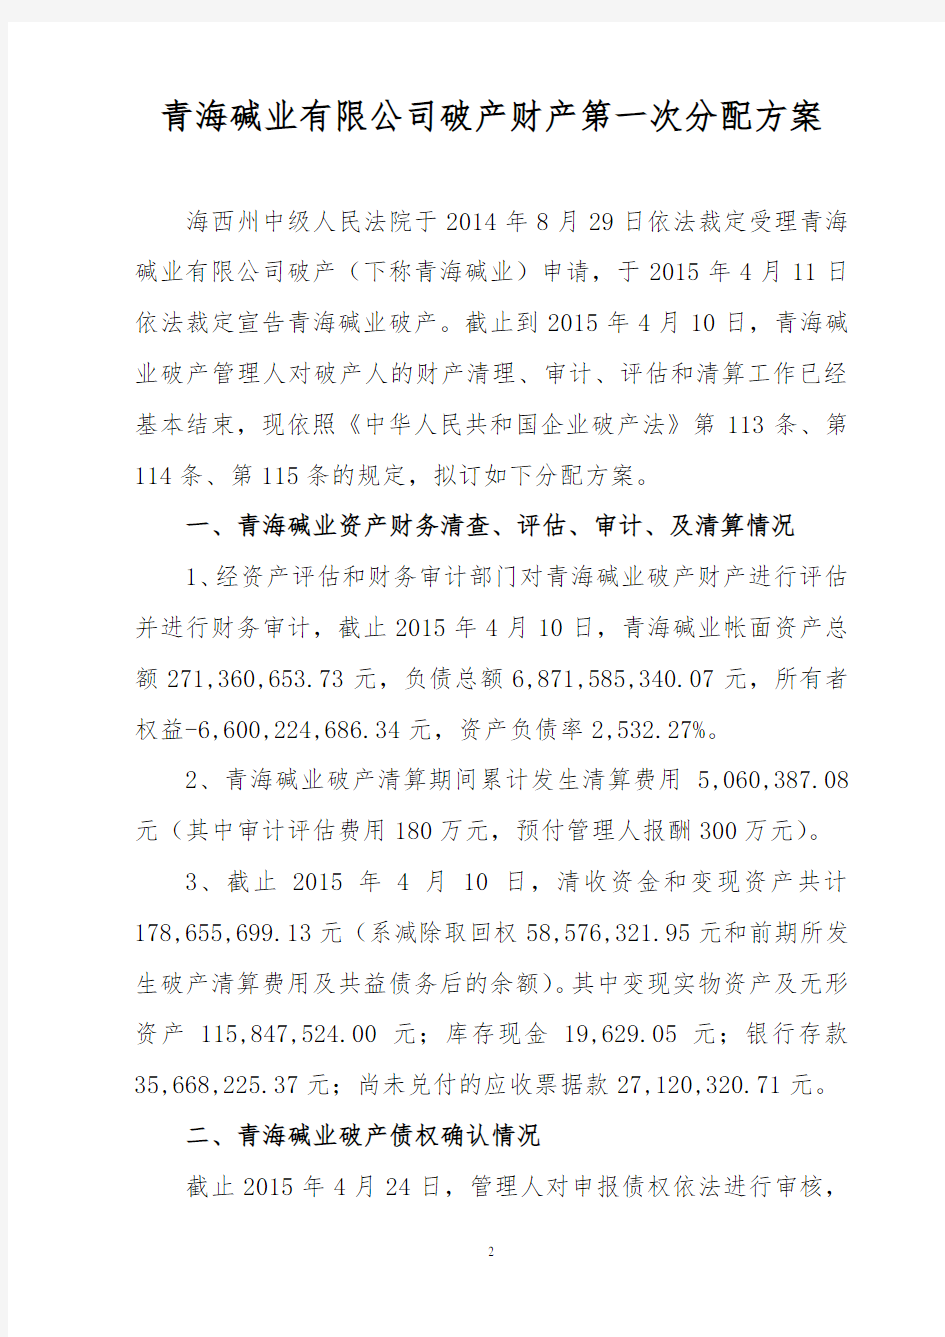 52-H-青海碱业破产财产分配方案及报告-1次-15.4.25